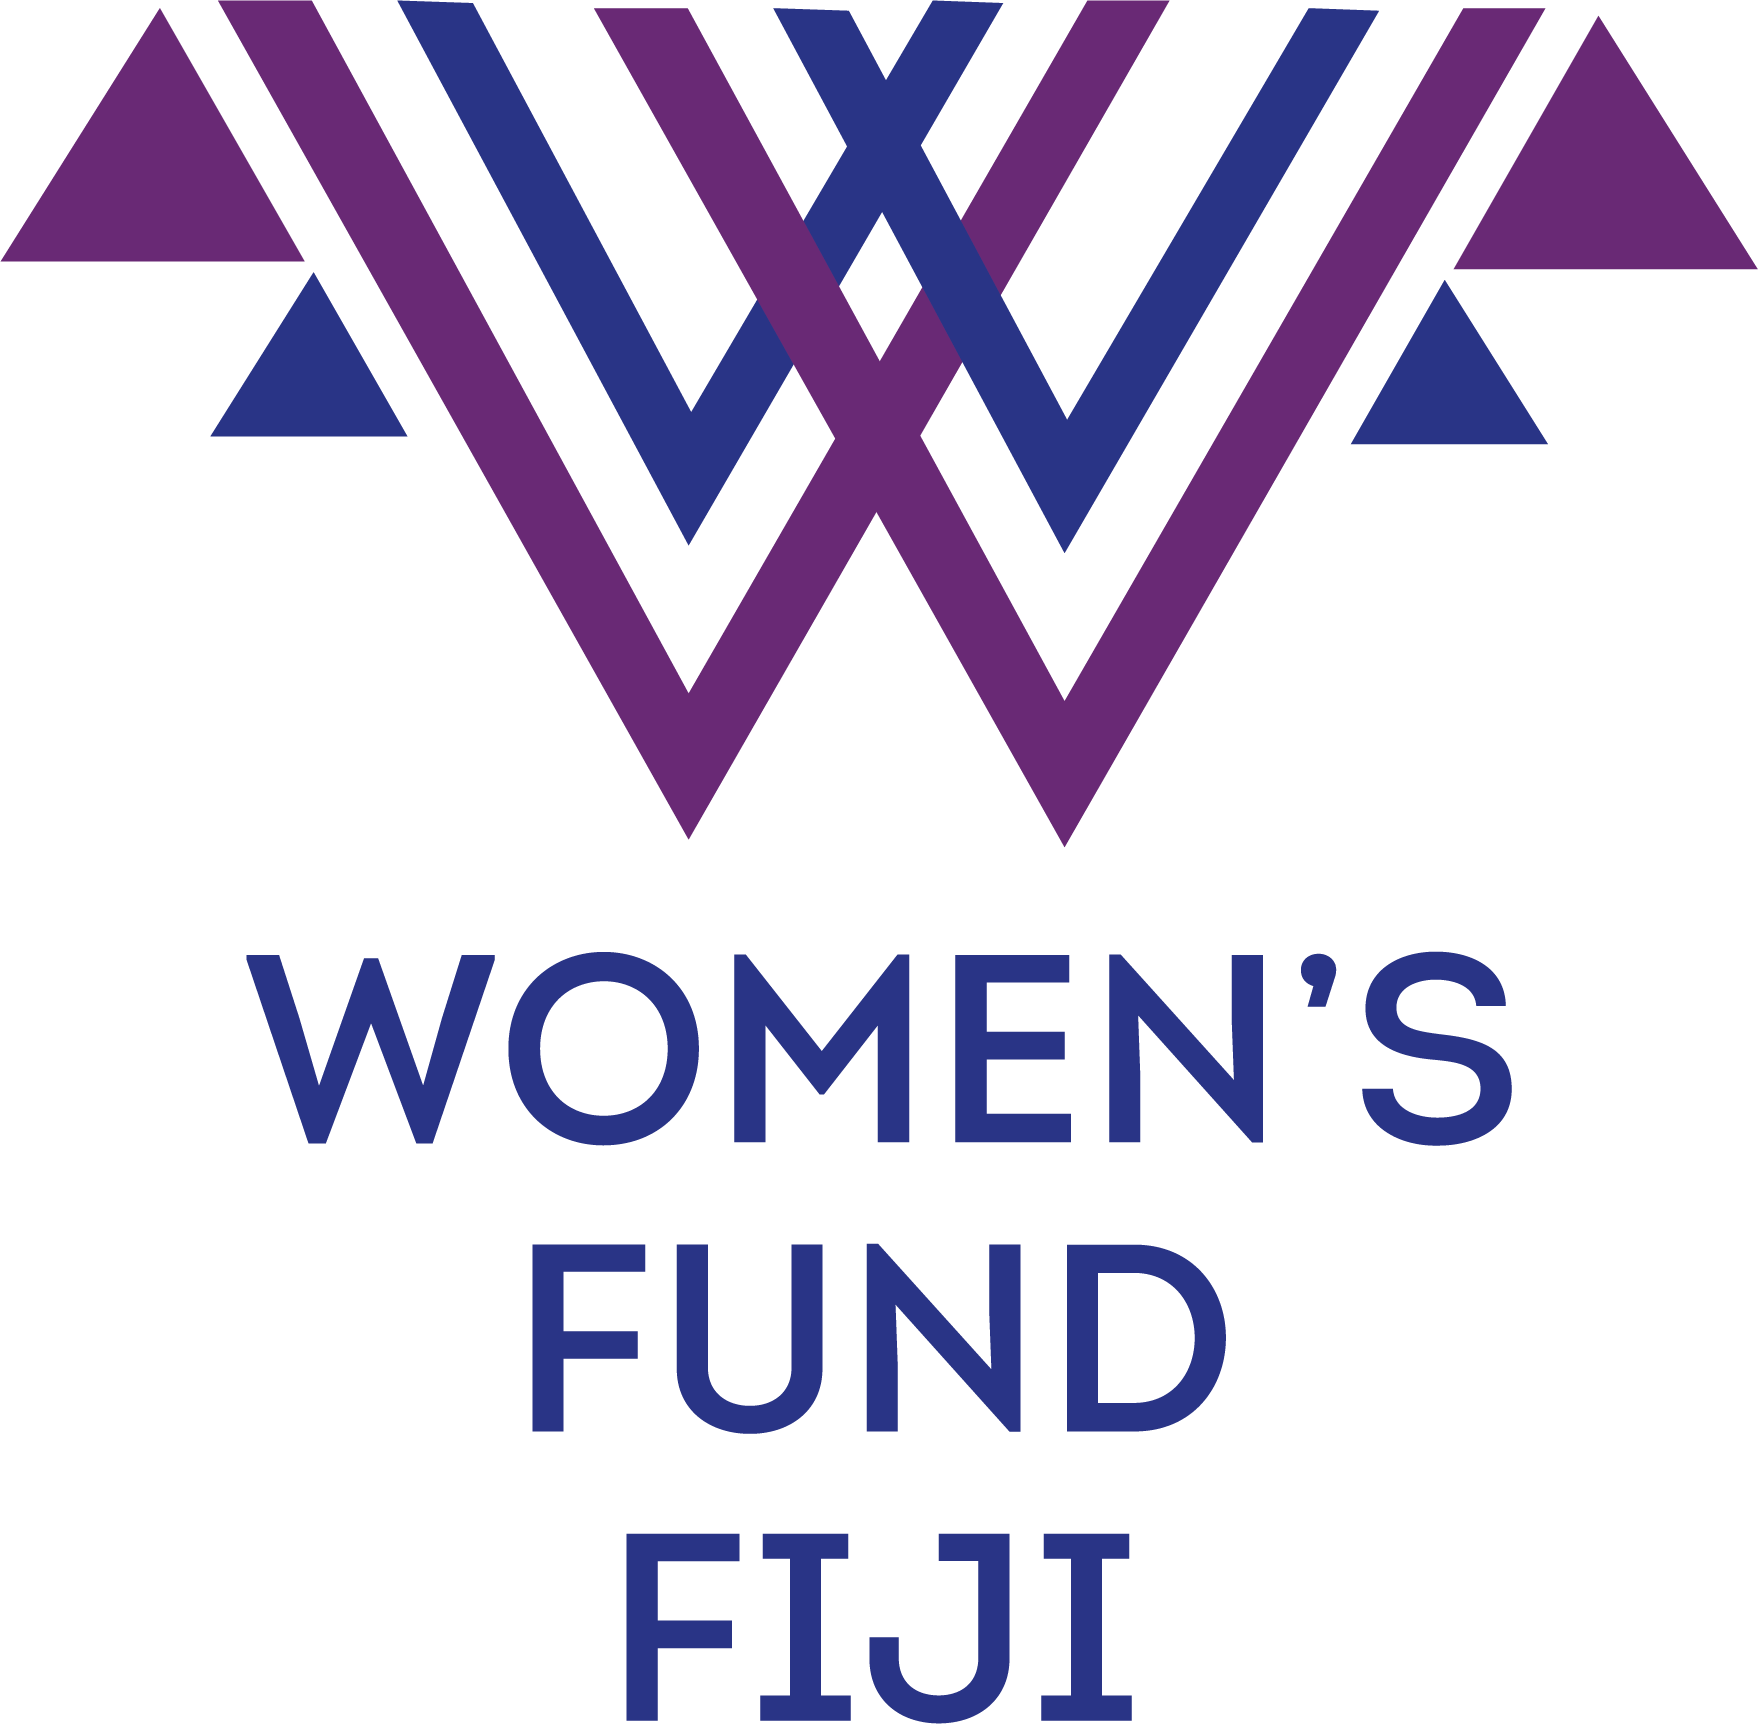 Women's Fund Fiji